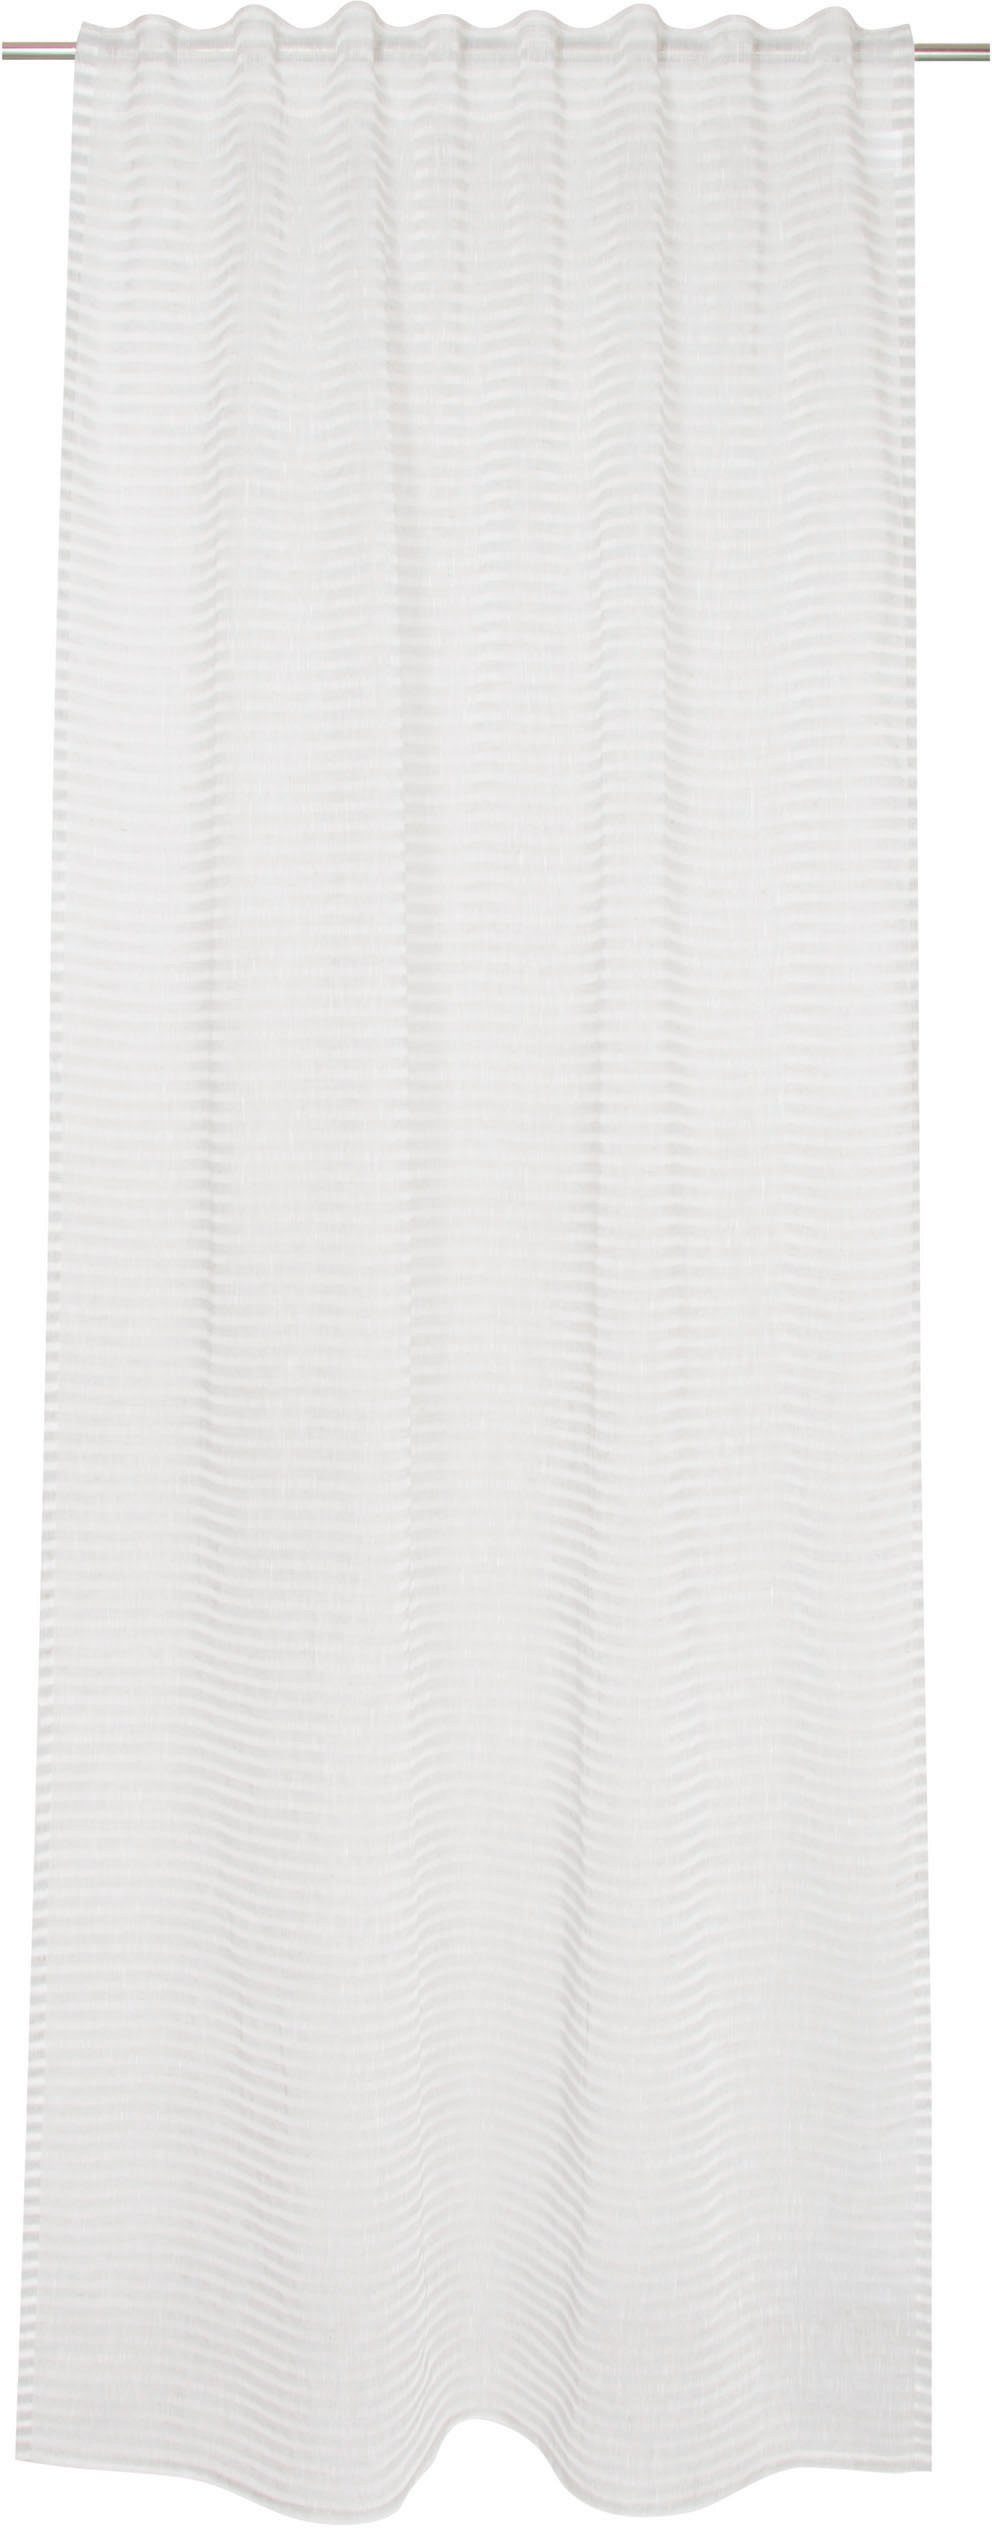 Stripe, St), transparent, TAILOR Natural Schlaufen grau transparent HOME, (1 TOM Vorhang verdeckte